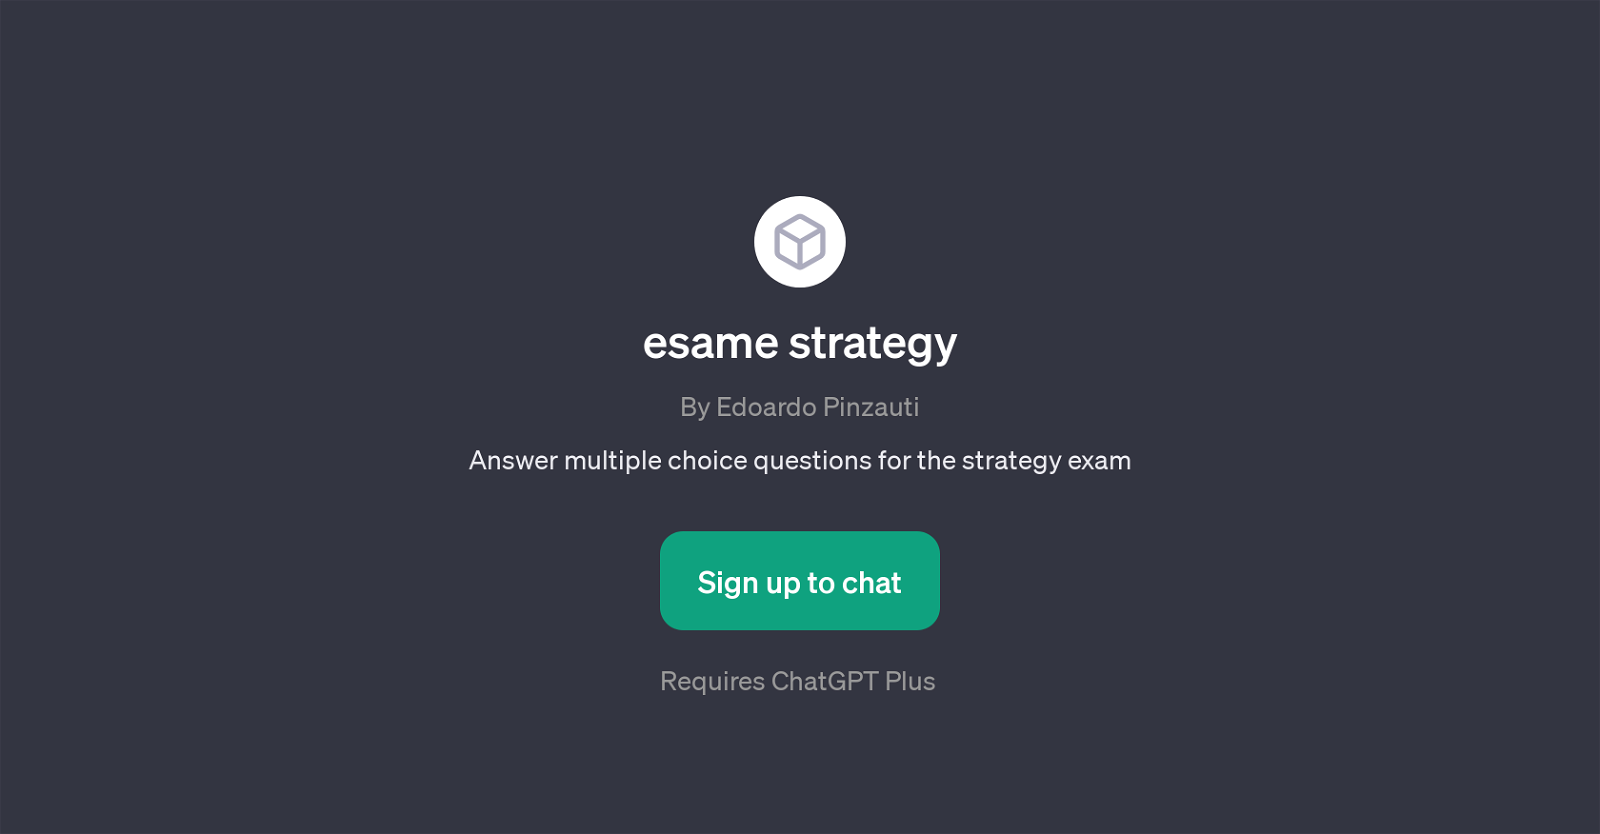 Esame strategy website